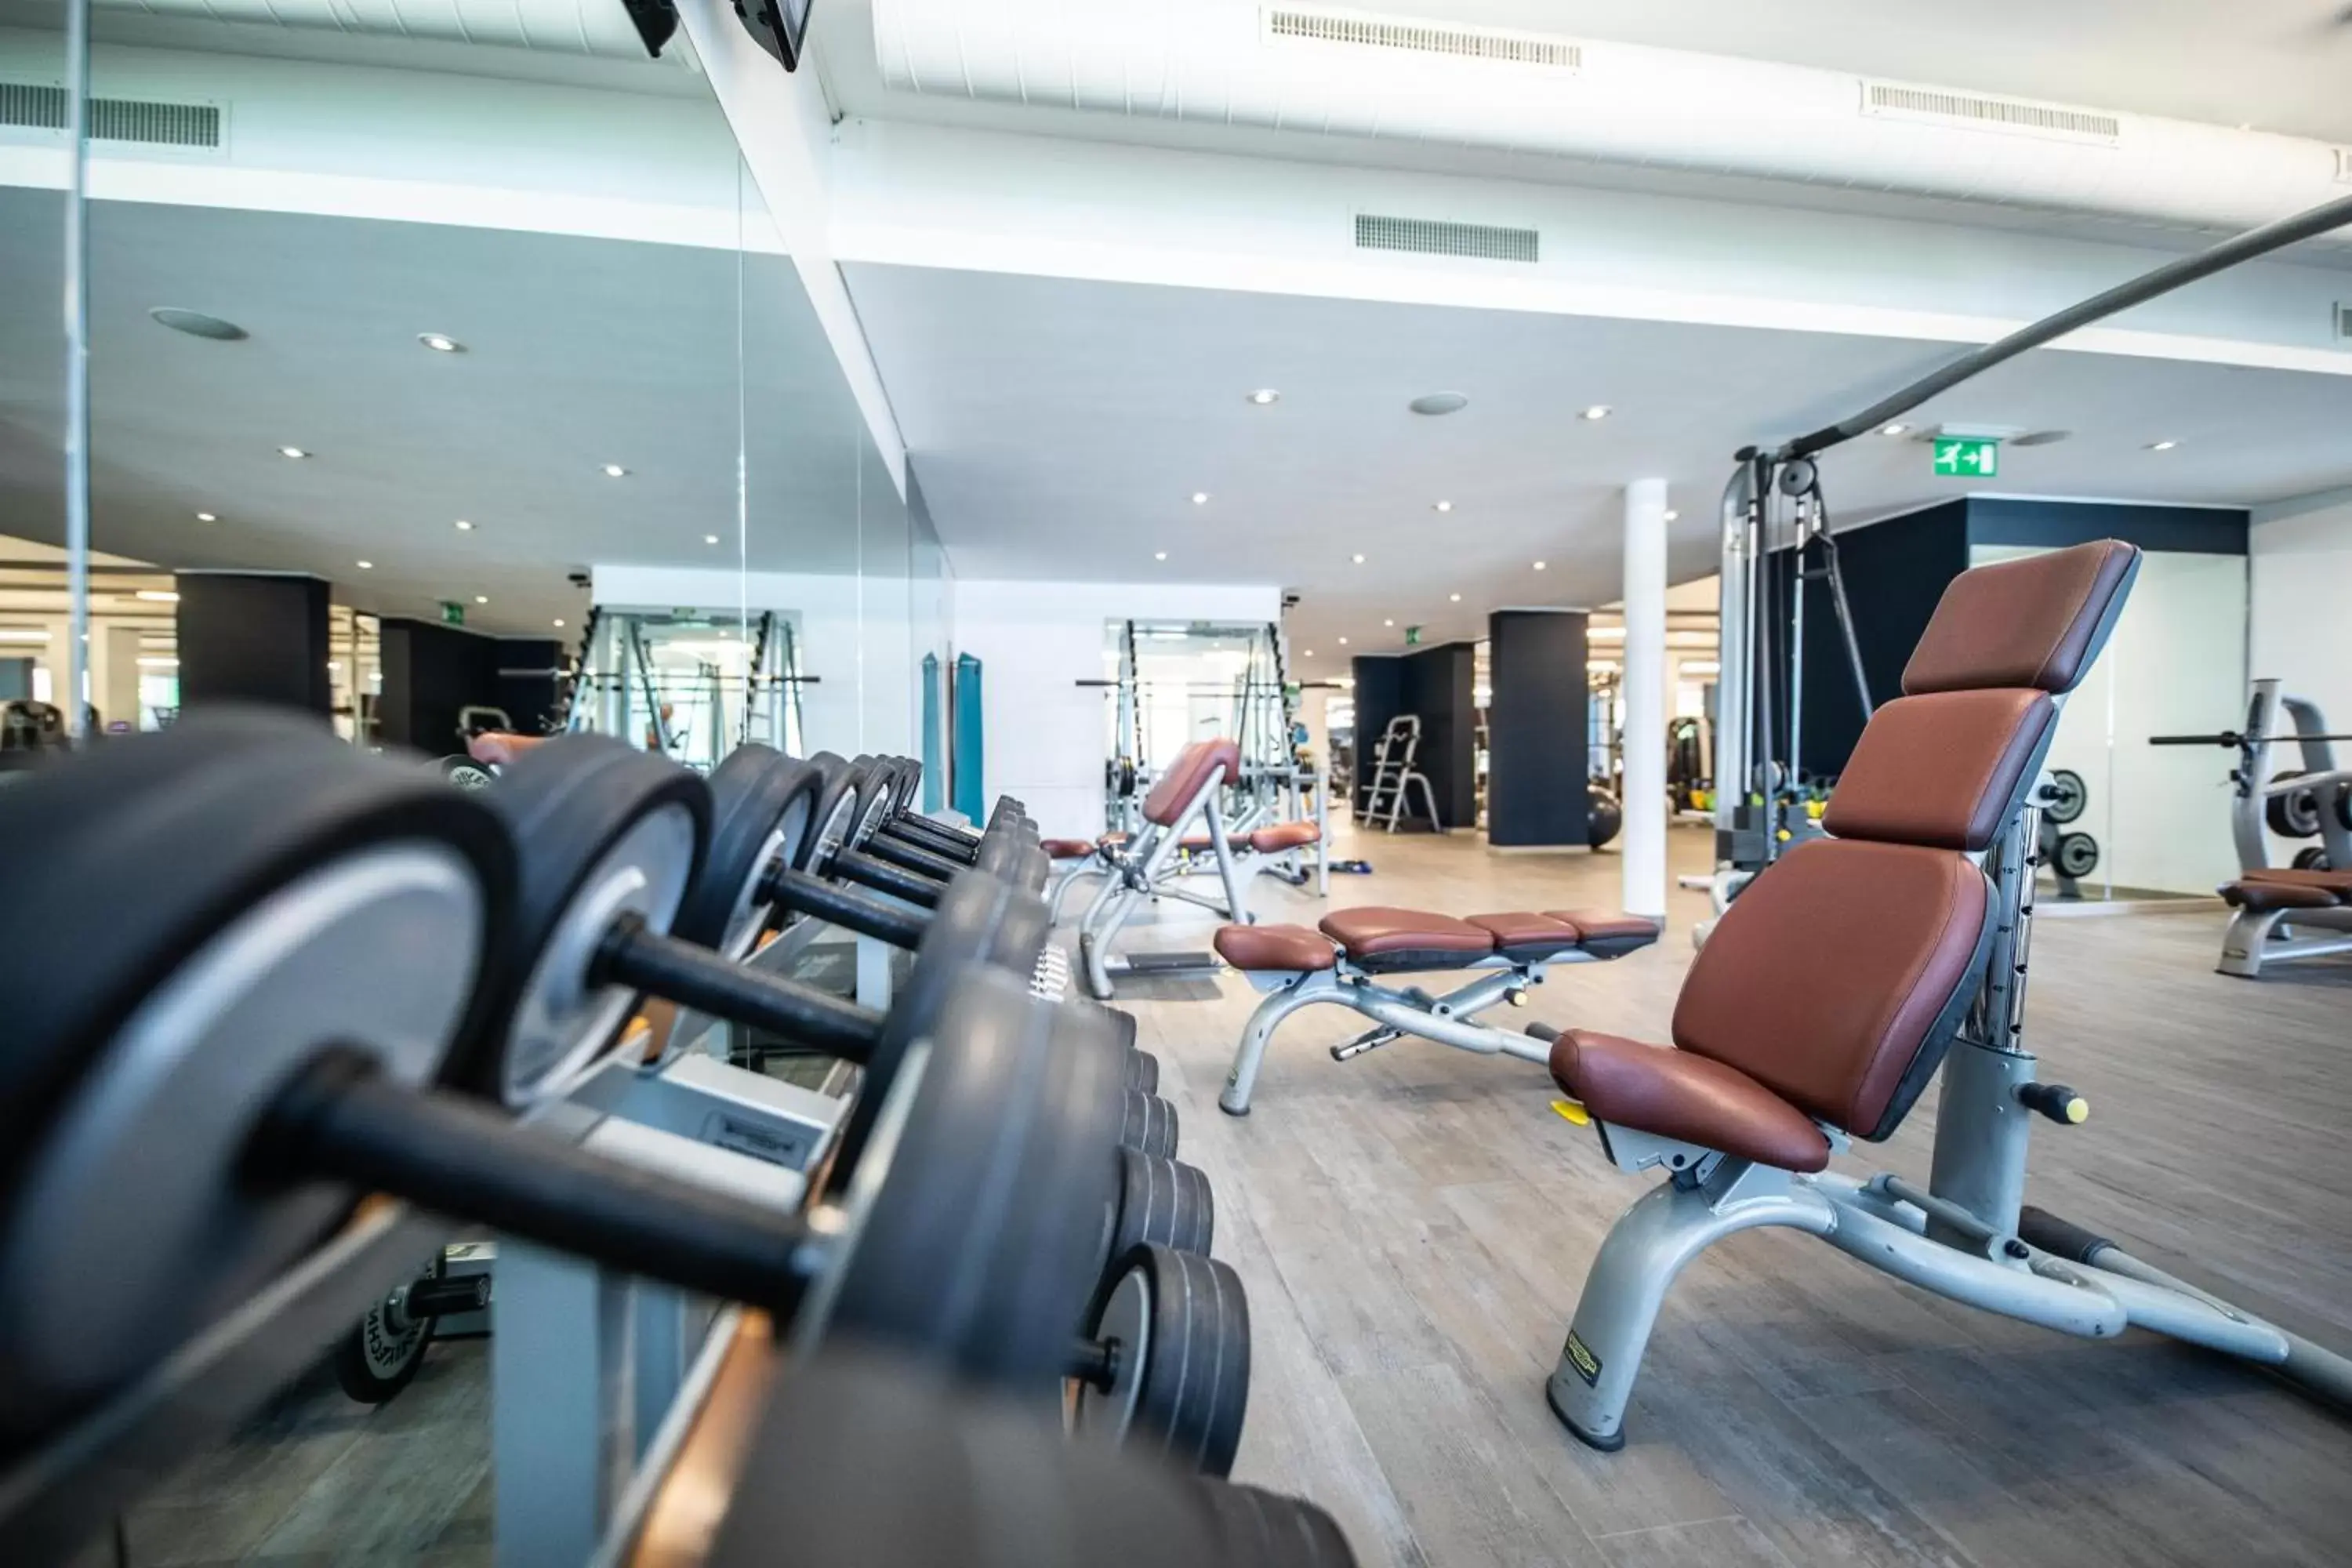 Fitness centre/facilities, Fitness Center/Facilities in Villa Sassa Hotel, Residence & Spa - Ticino Hotels Group